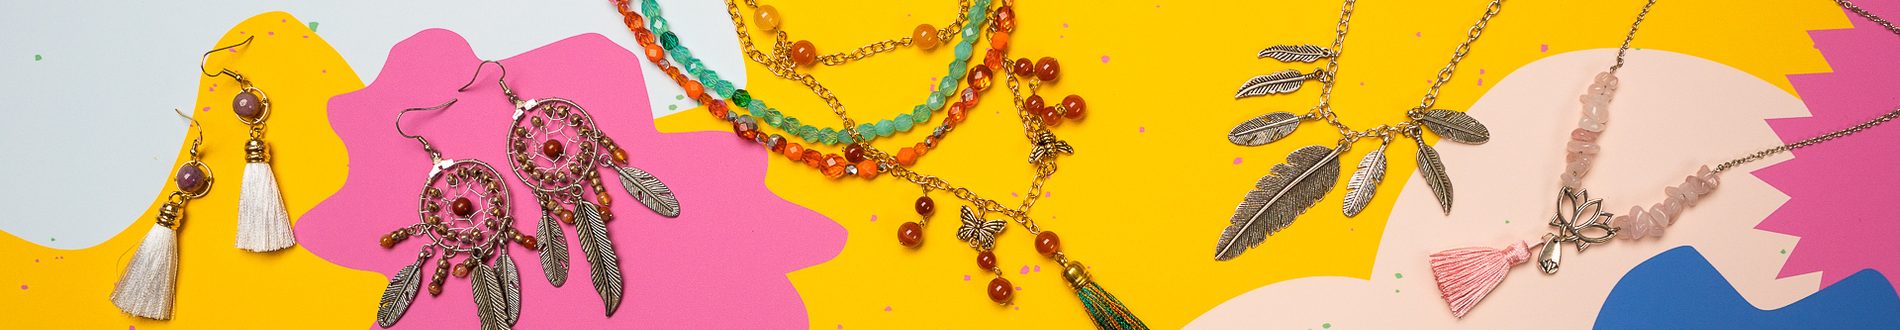 Boho bracelets and necklaces